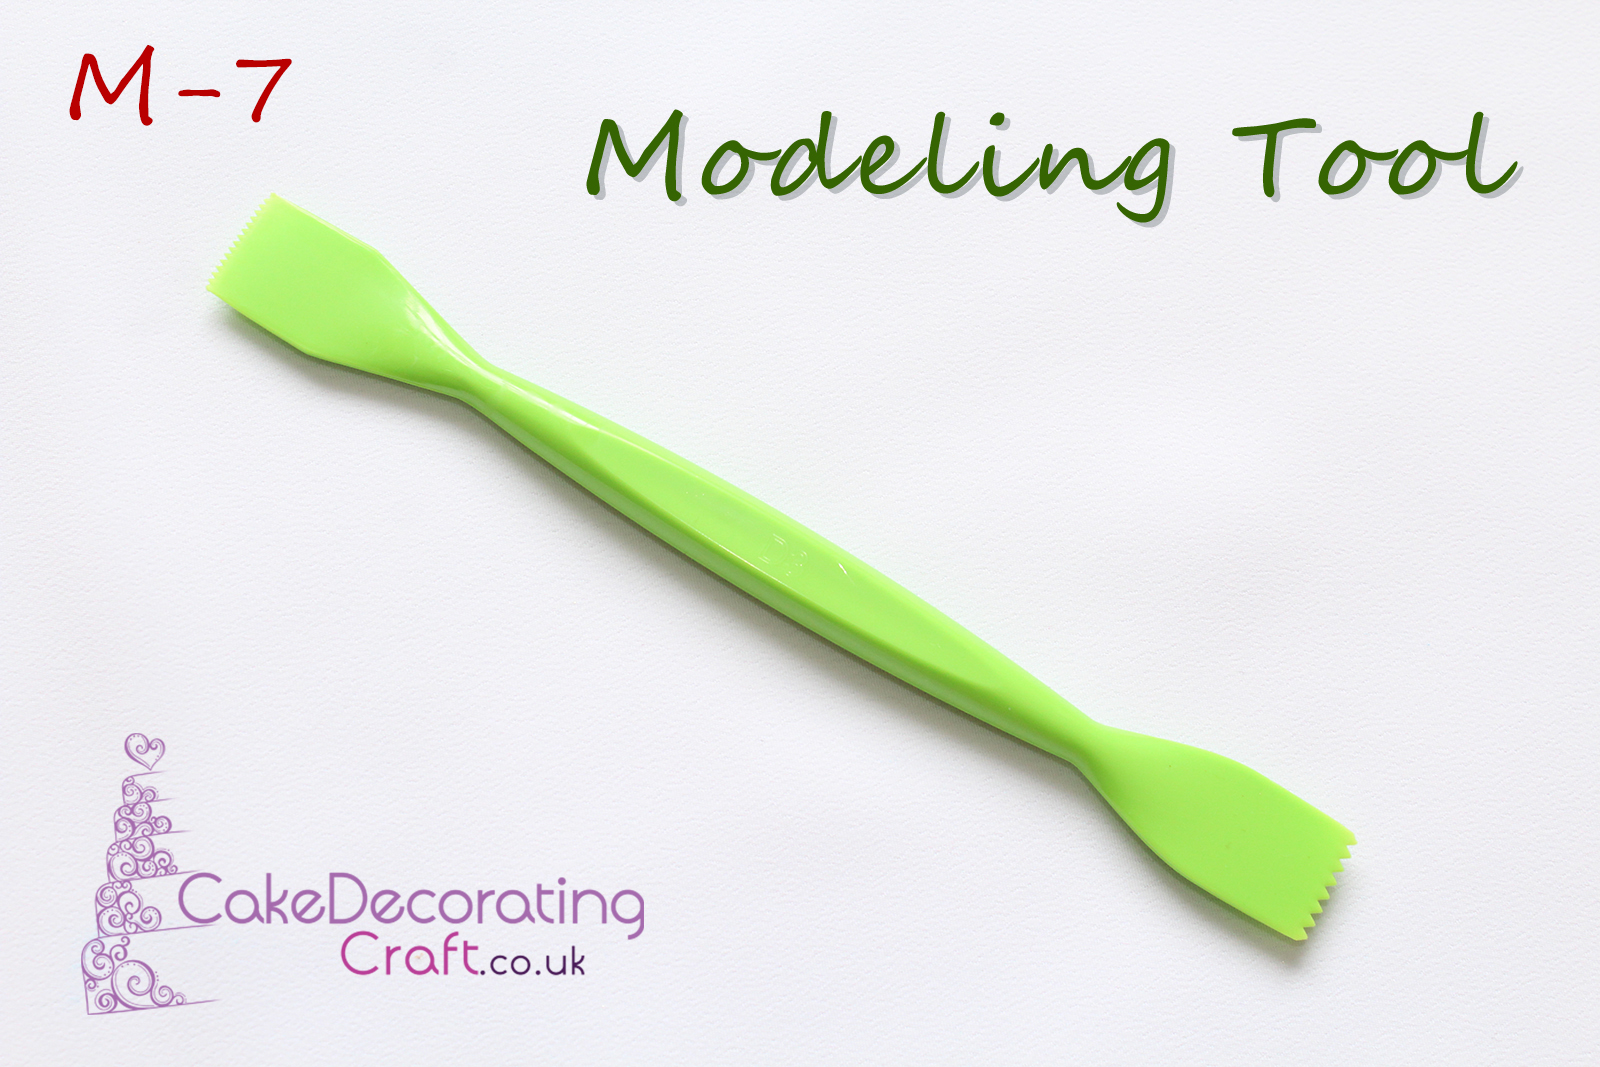 Cake Decorating Craft Modelling Tools | Double Ended | Gum Paste Flower Paste Modelling Sugar Paste Craft | M-7